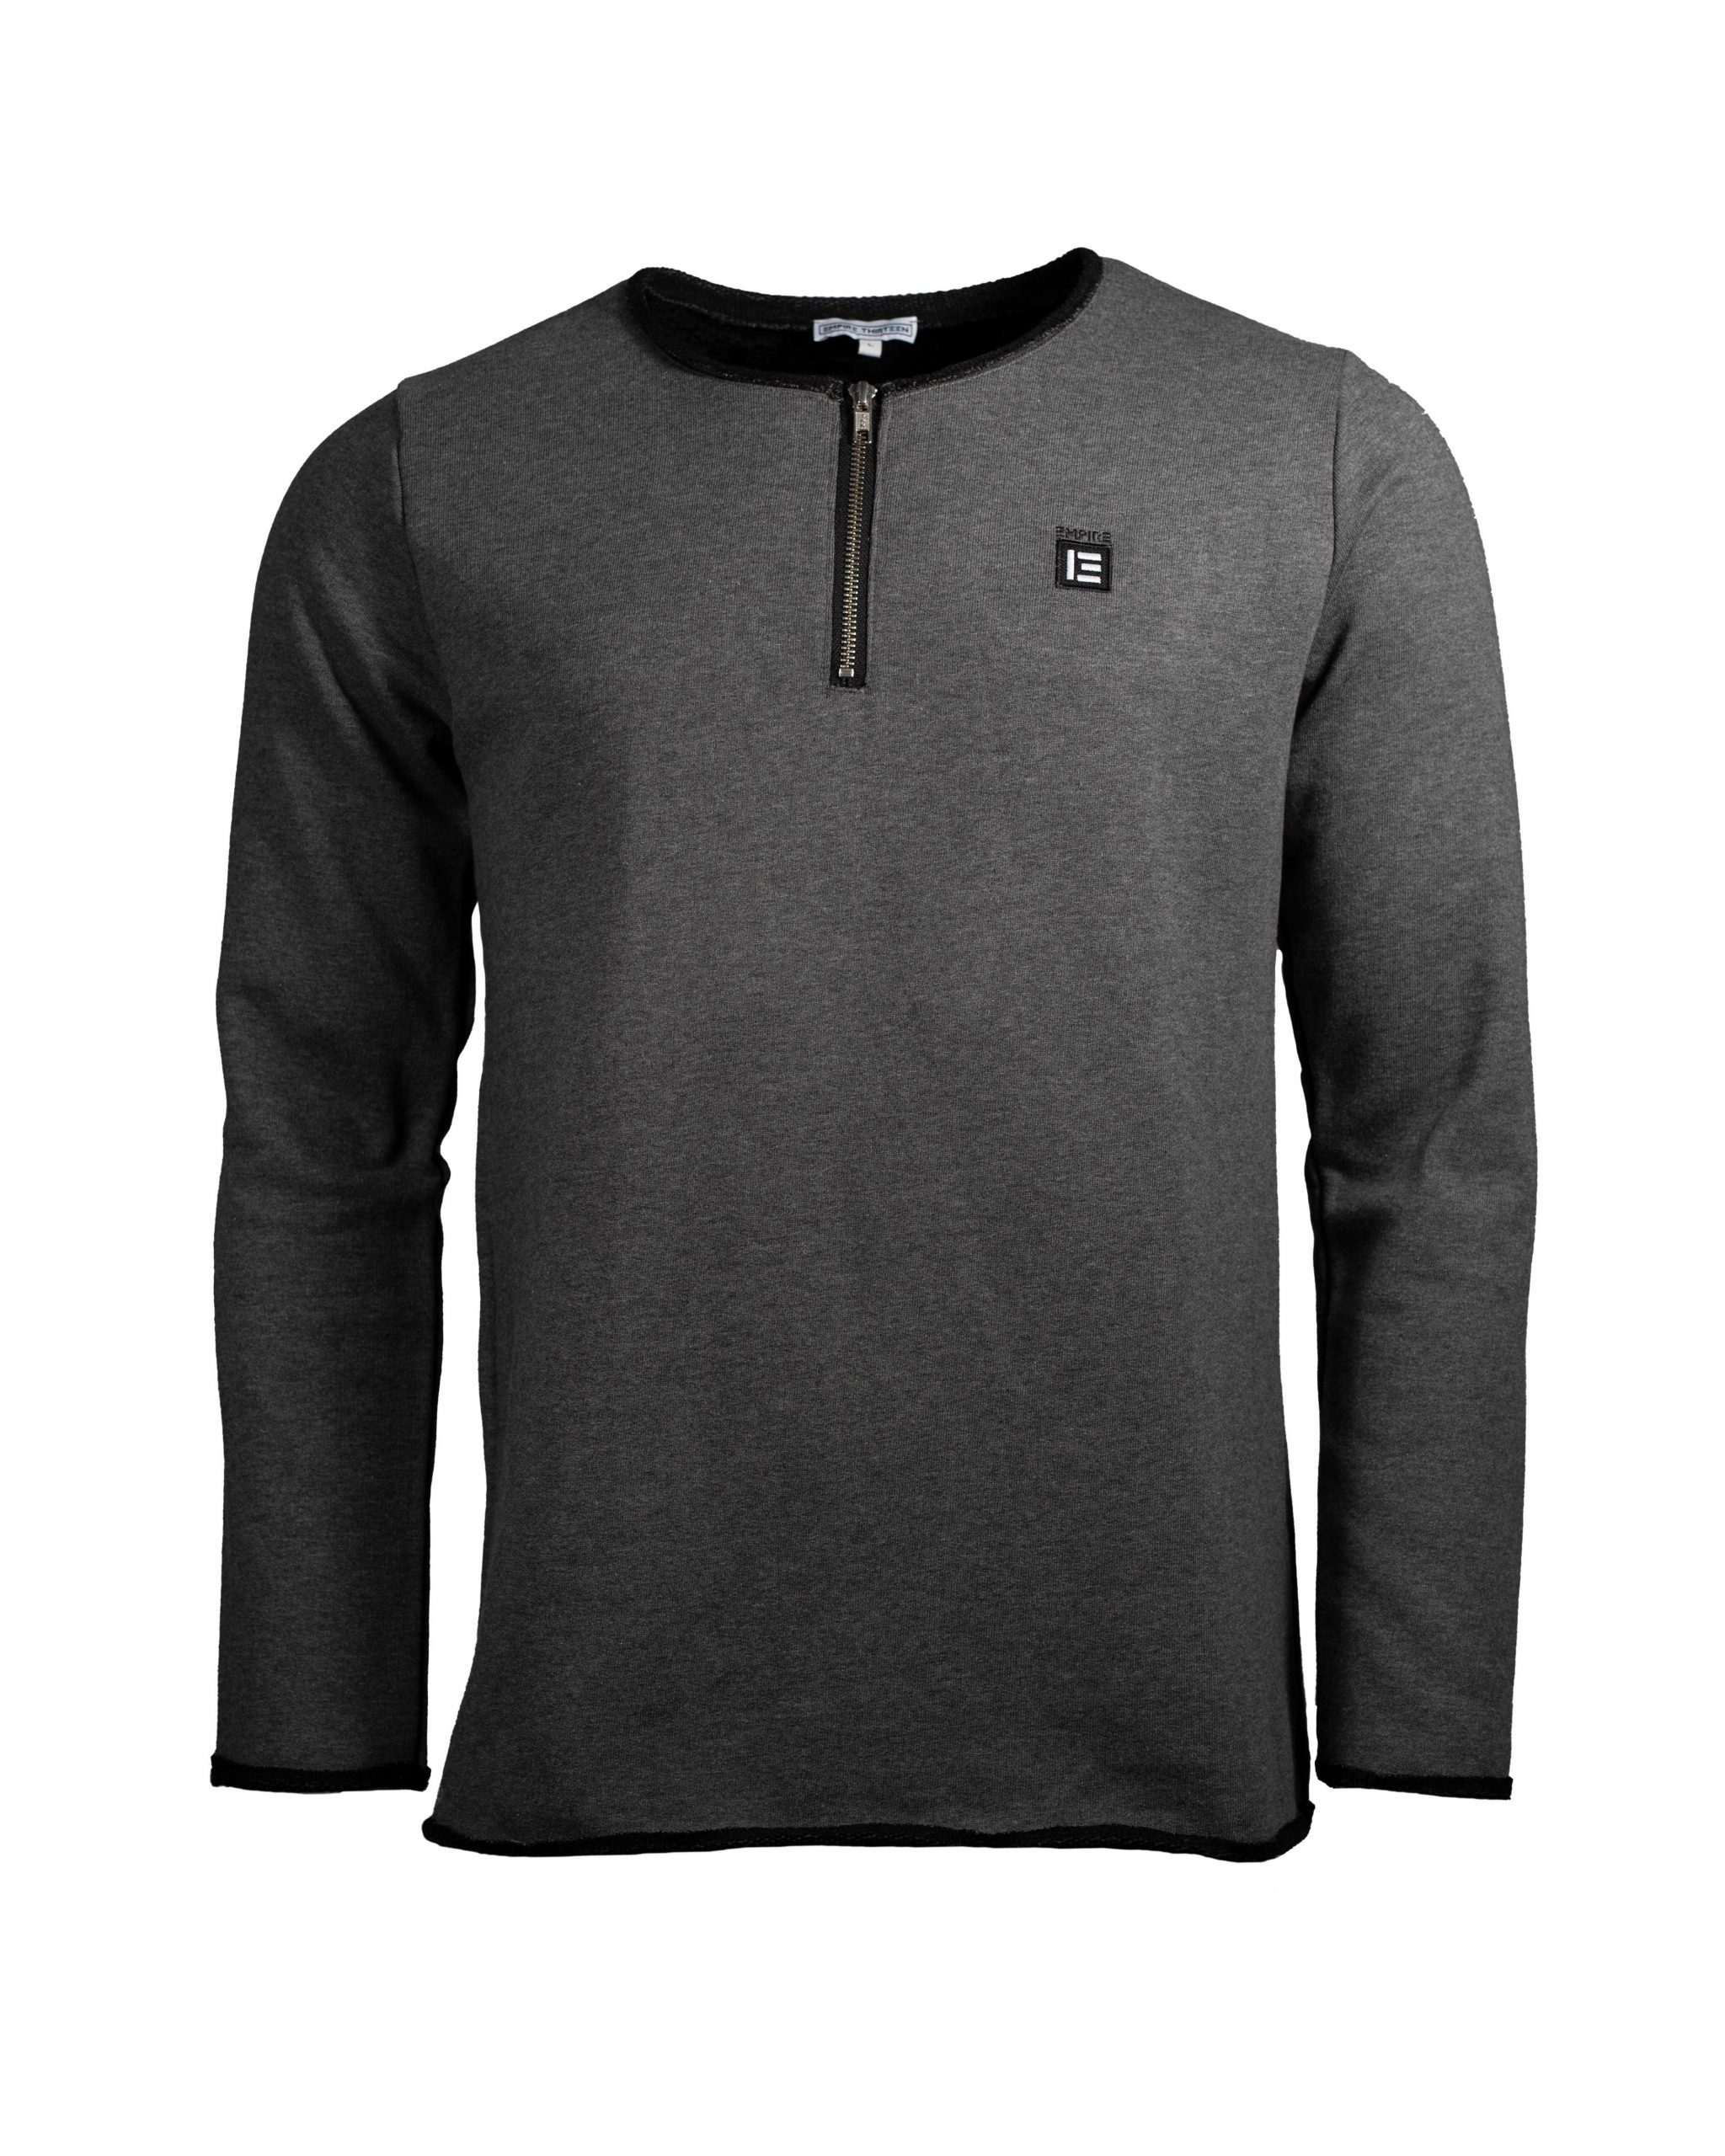 EMPIRE-THIRTEEN Sweater "EMPIRE" BASIC SWEATER MEN schwarzer Futterfaden grau